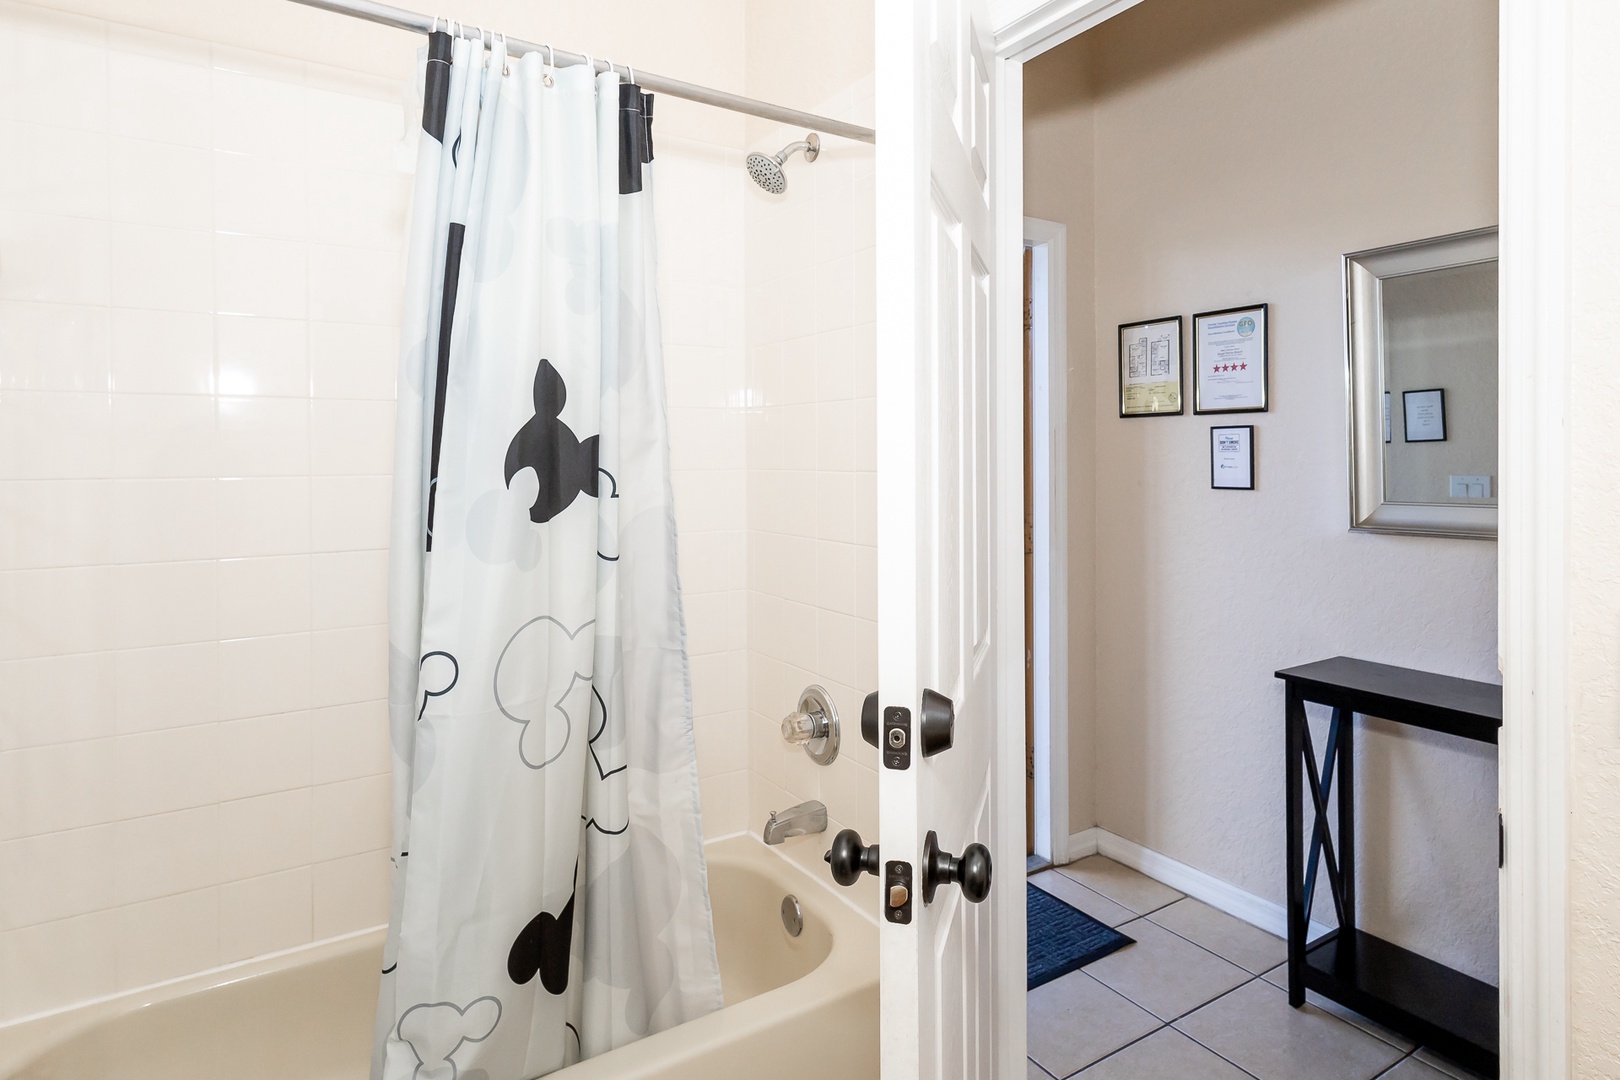 The 1st floor en suite bathroom includes a single vanity & shower/tub combo